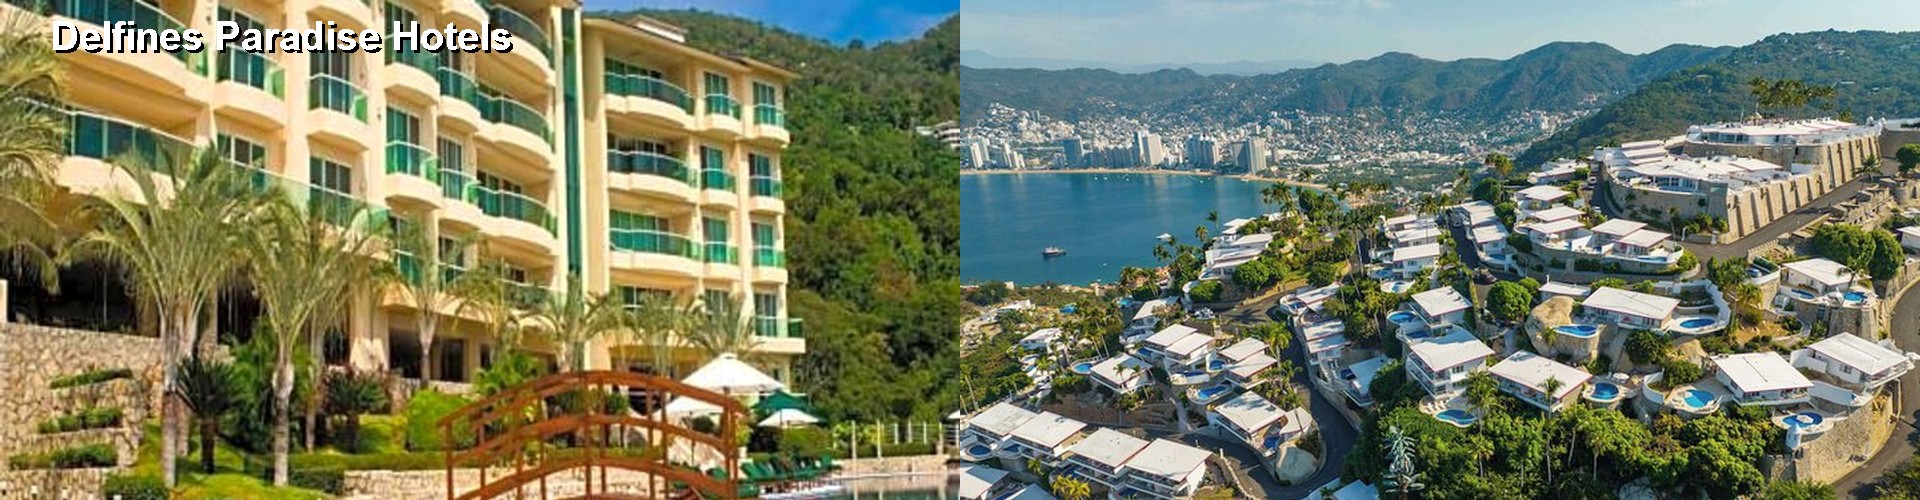 5 Best Hotels near Delfines Paradise